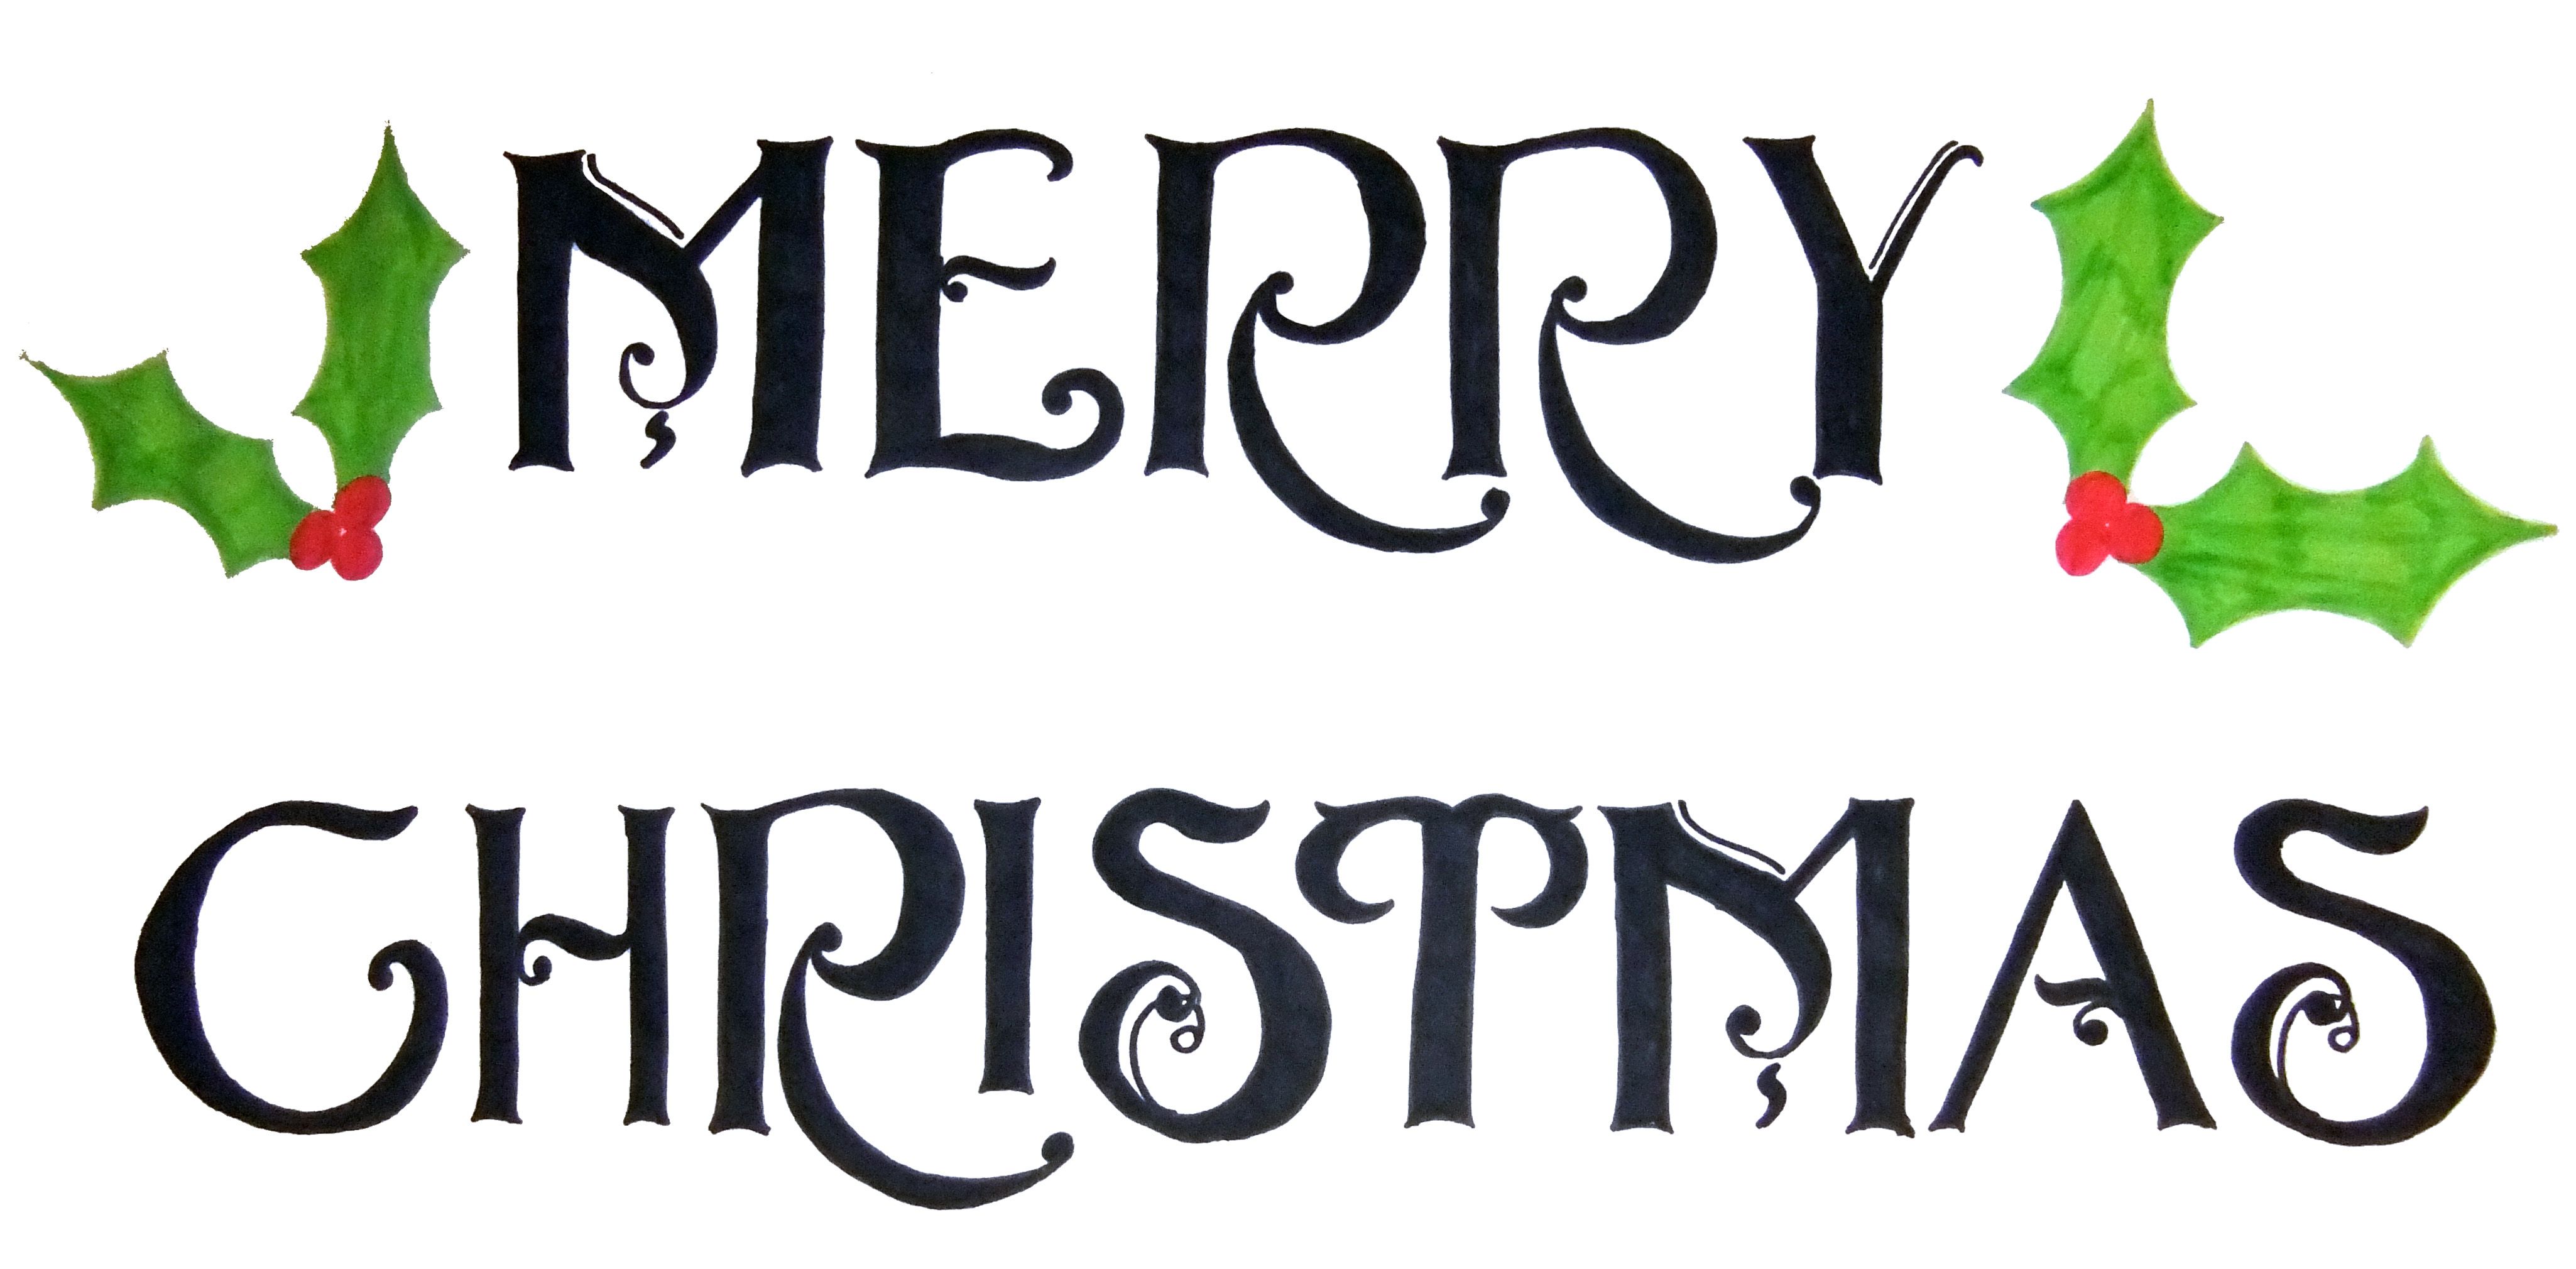 merry christmas word design